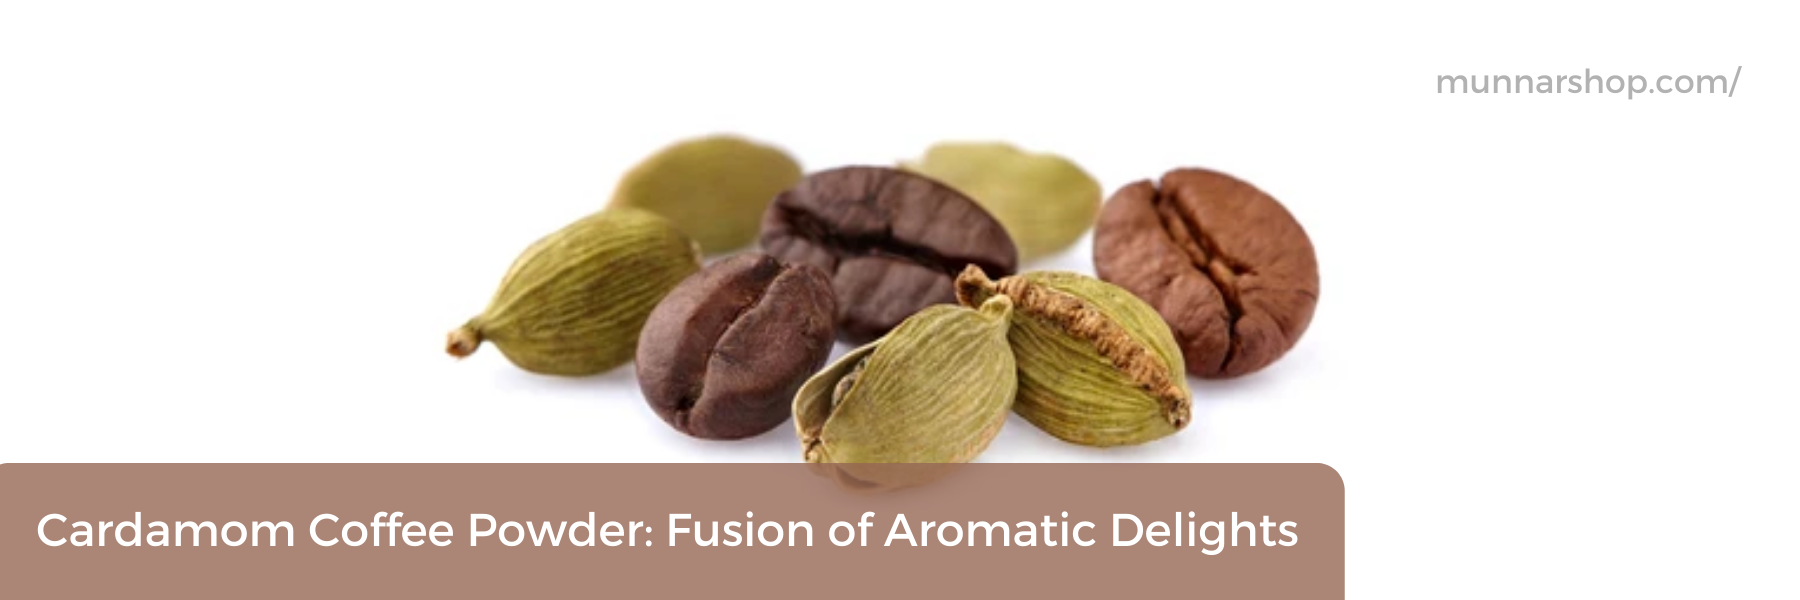 Cardamom Coffee Powder Fusion of Aromatic Delights